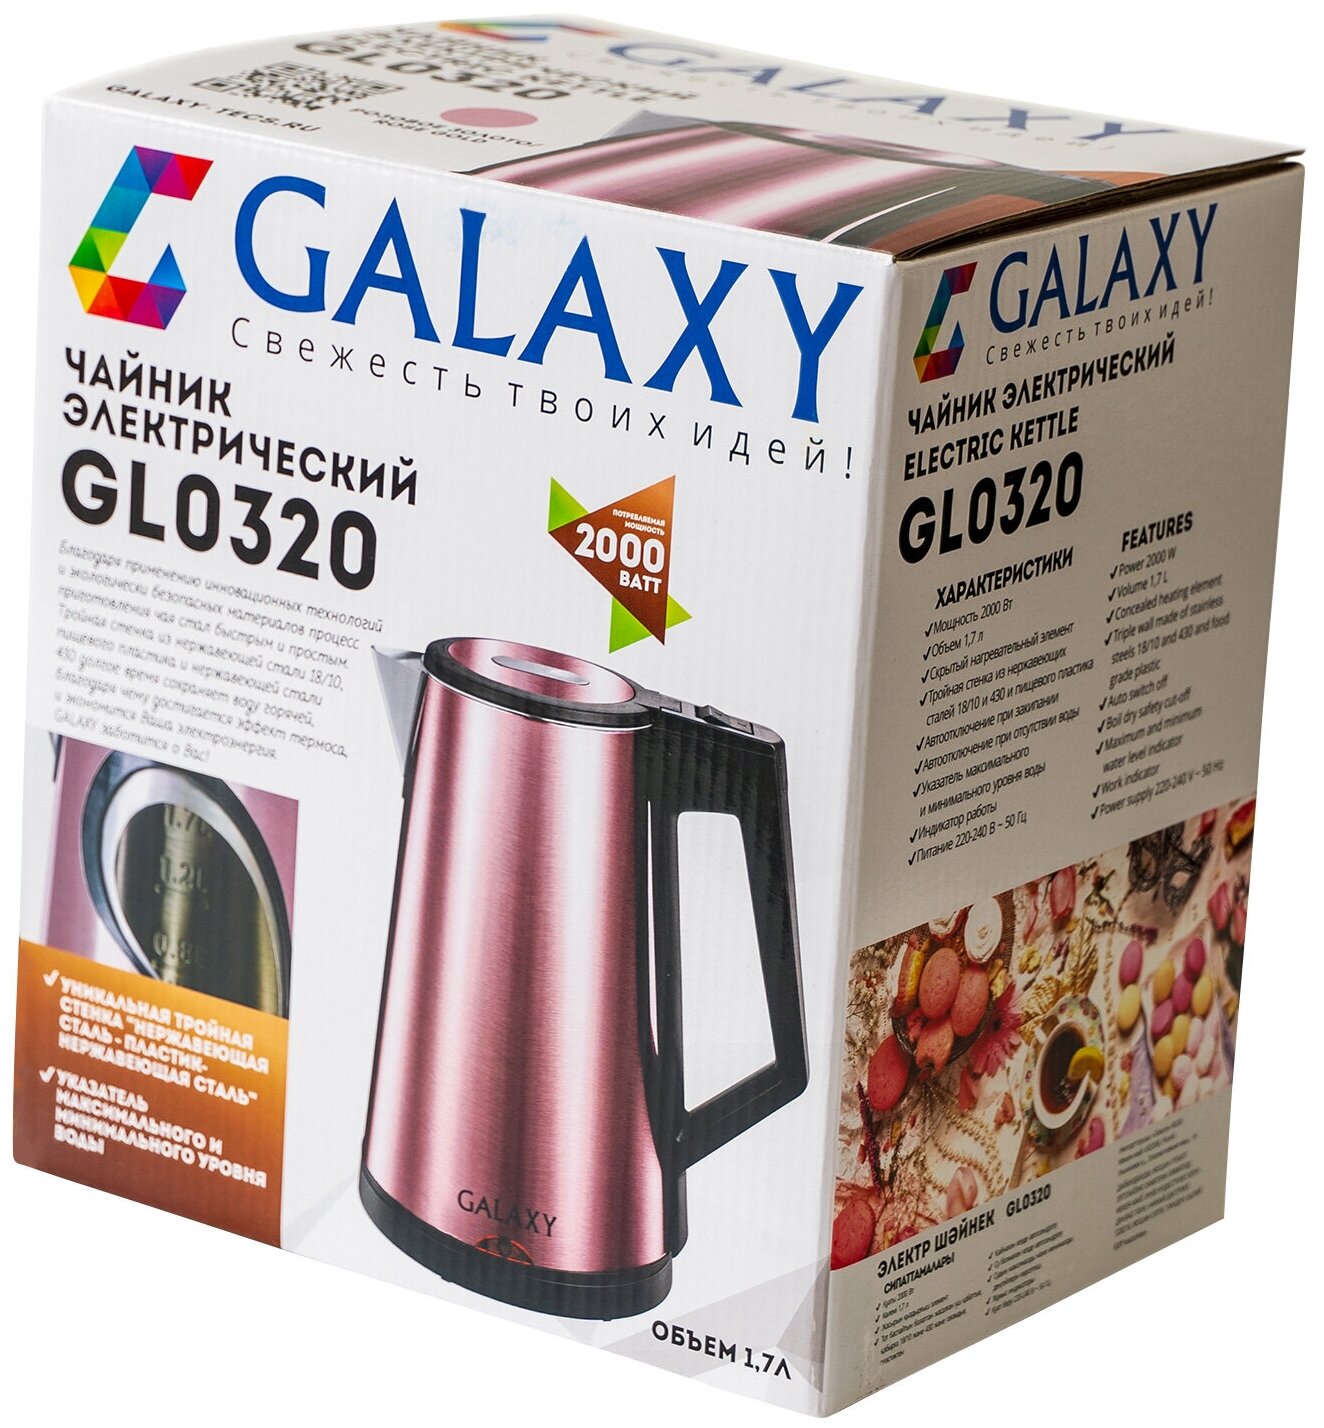 null Чайник Galaxy "GL0320", электрический, розовое золото. null.